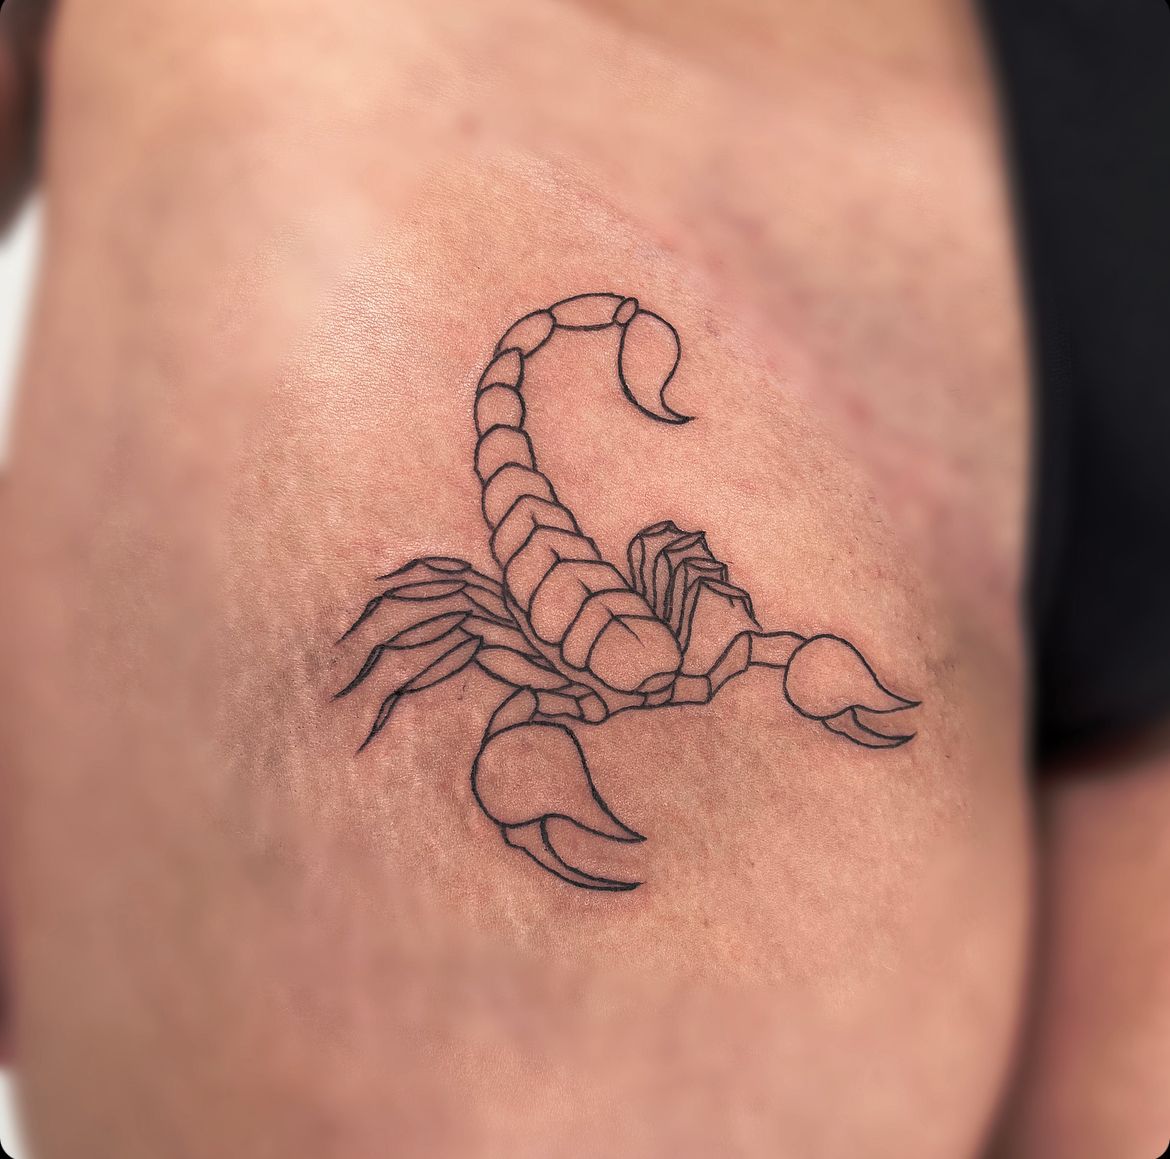 Scorpion Tattoos: The Meaning Behind This Popular Design | Scorpion tattoo,  Arm tattoos for guys, Scorpio tattoo